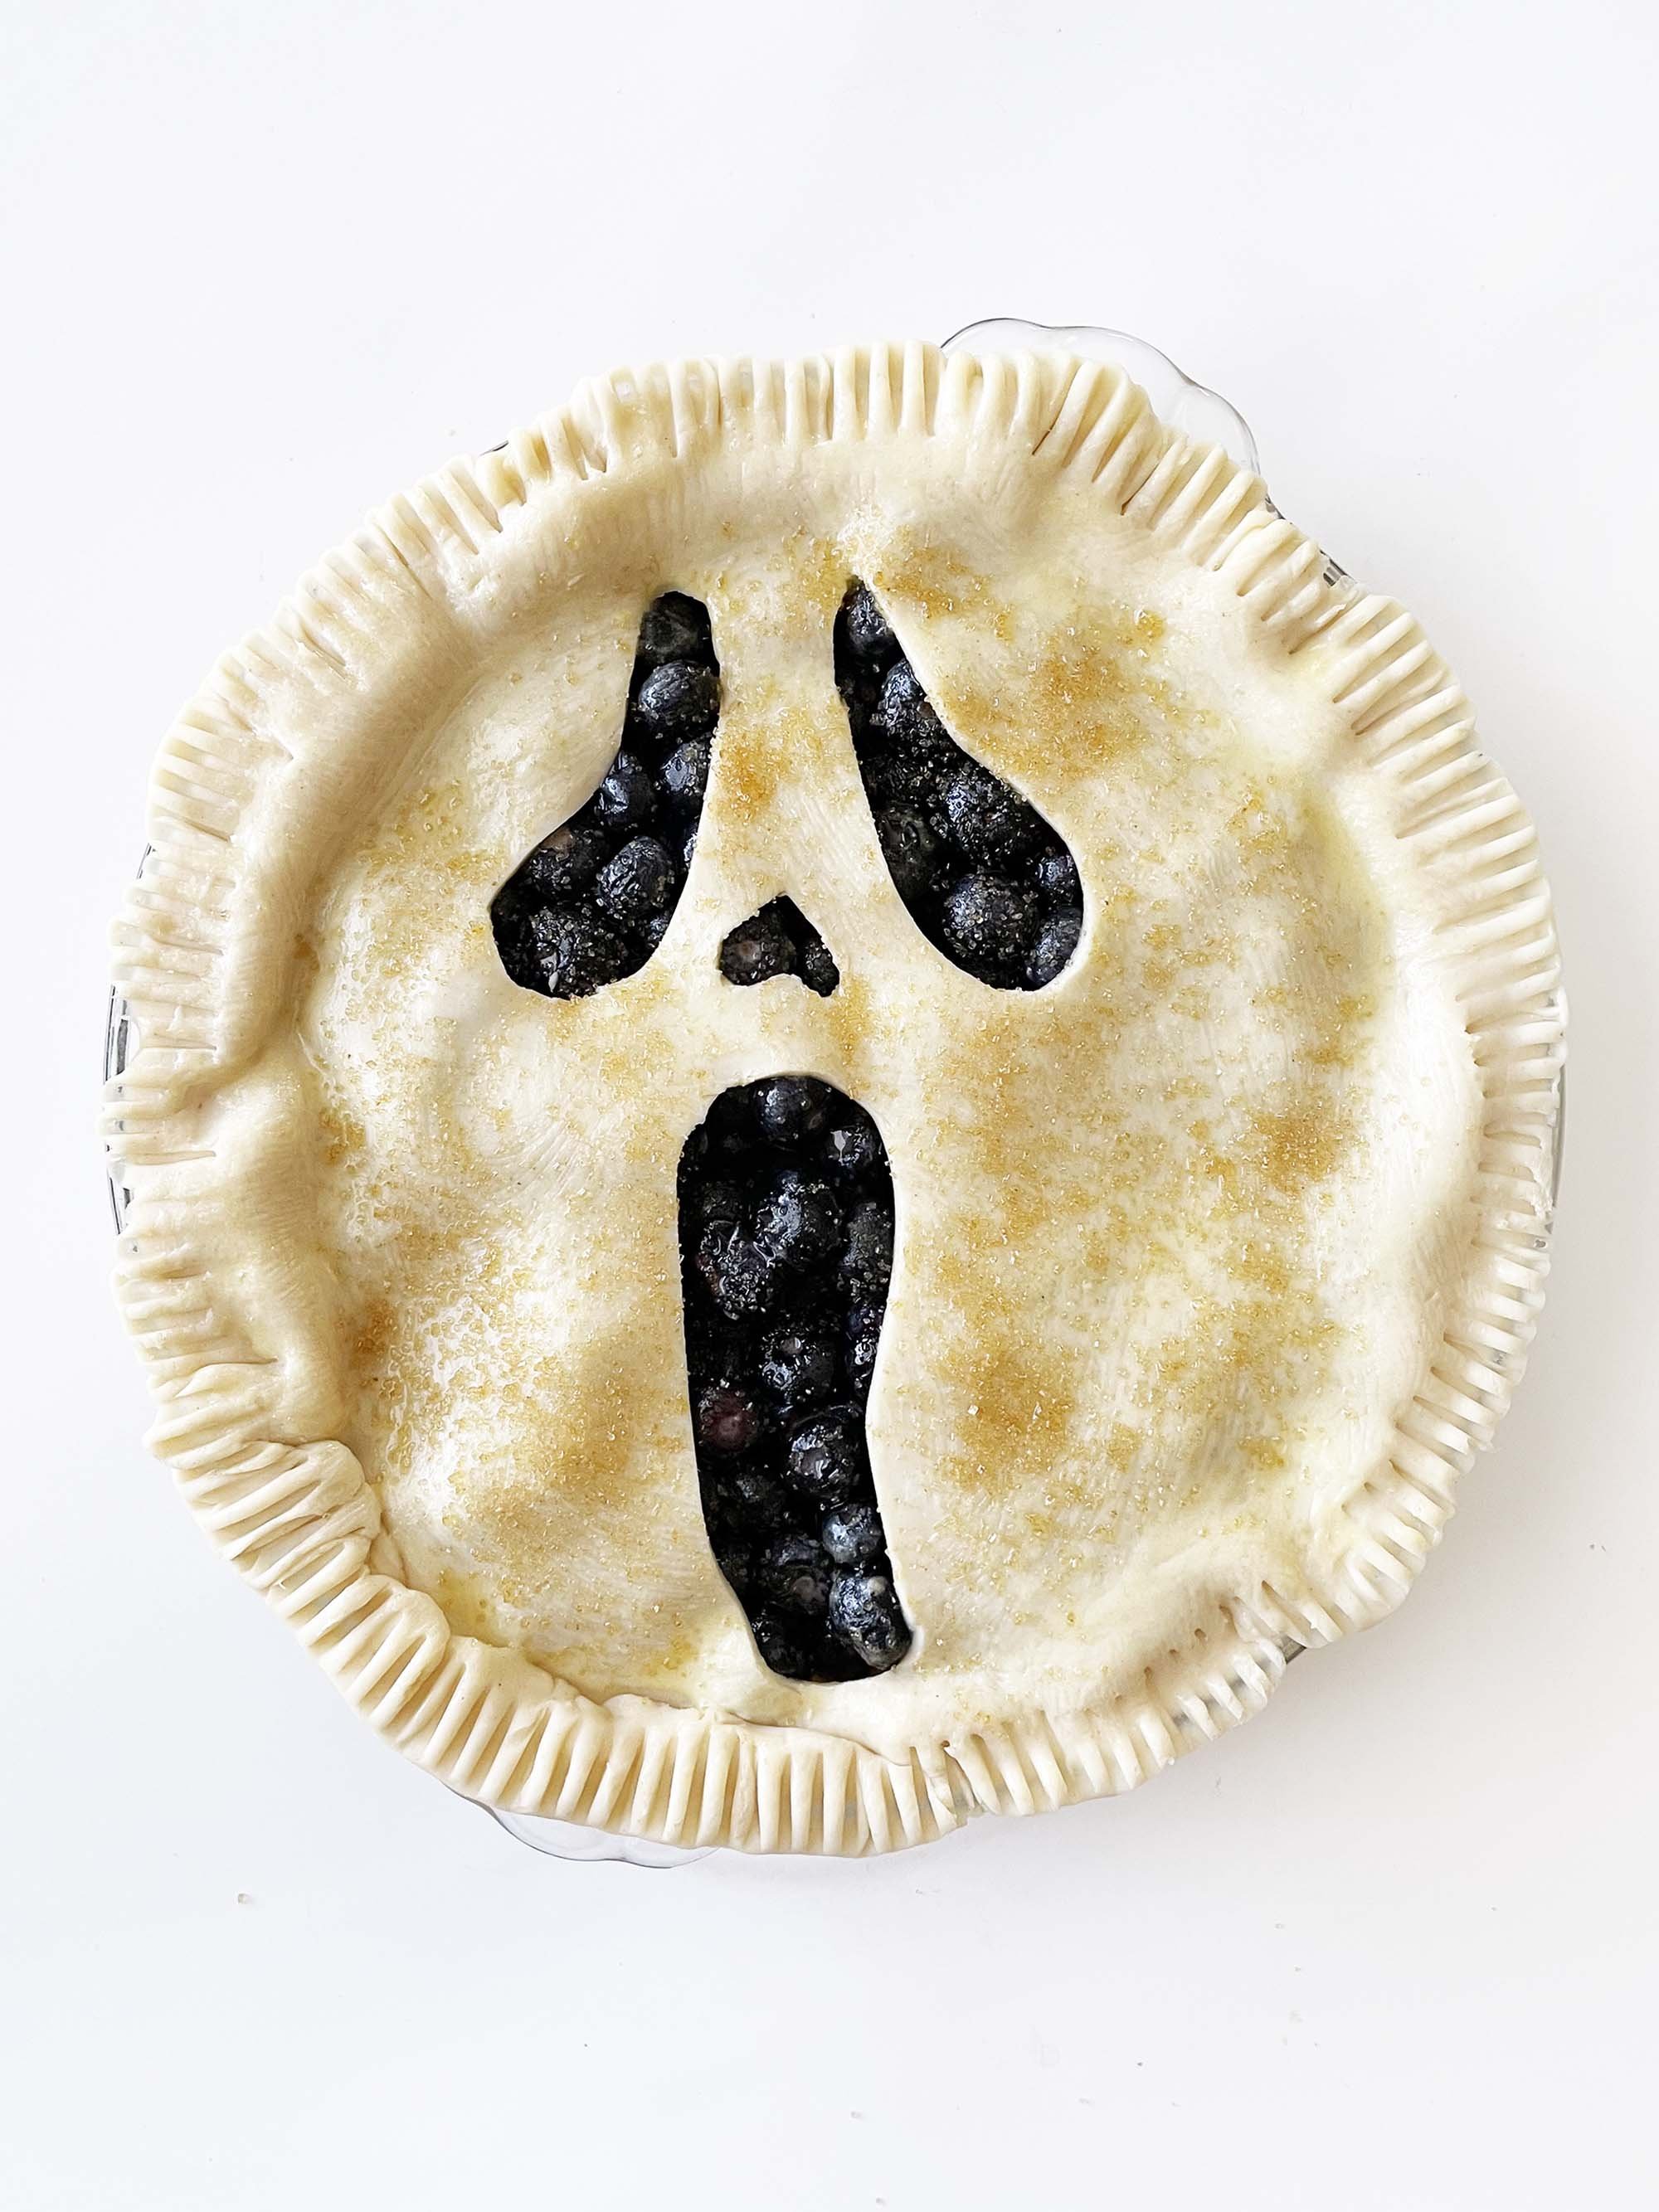 blueberry-pie4.jpg